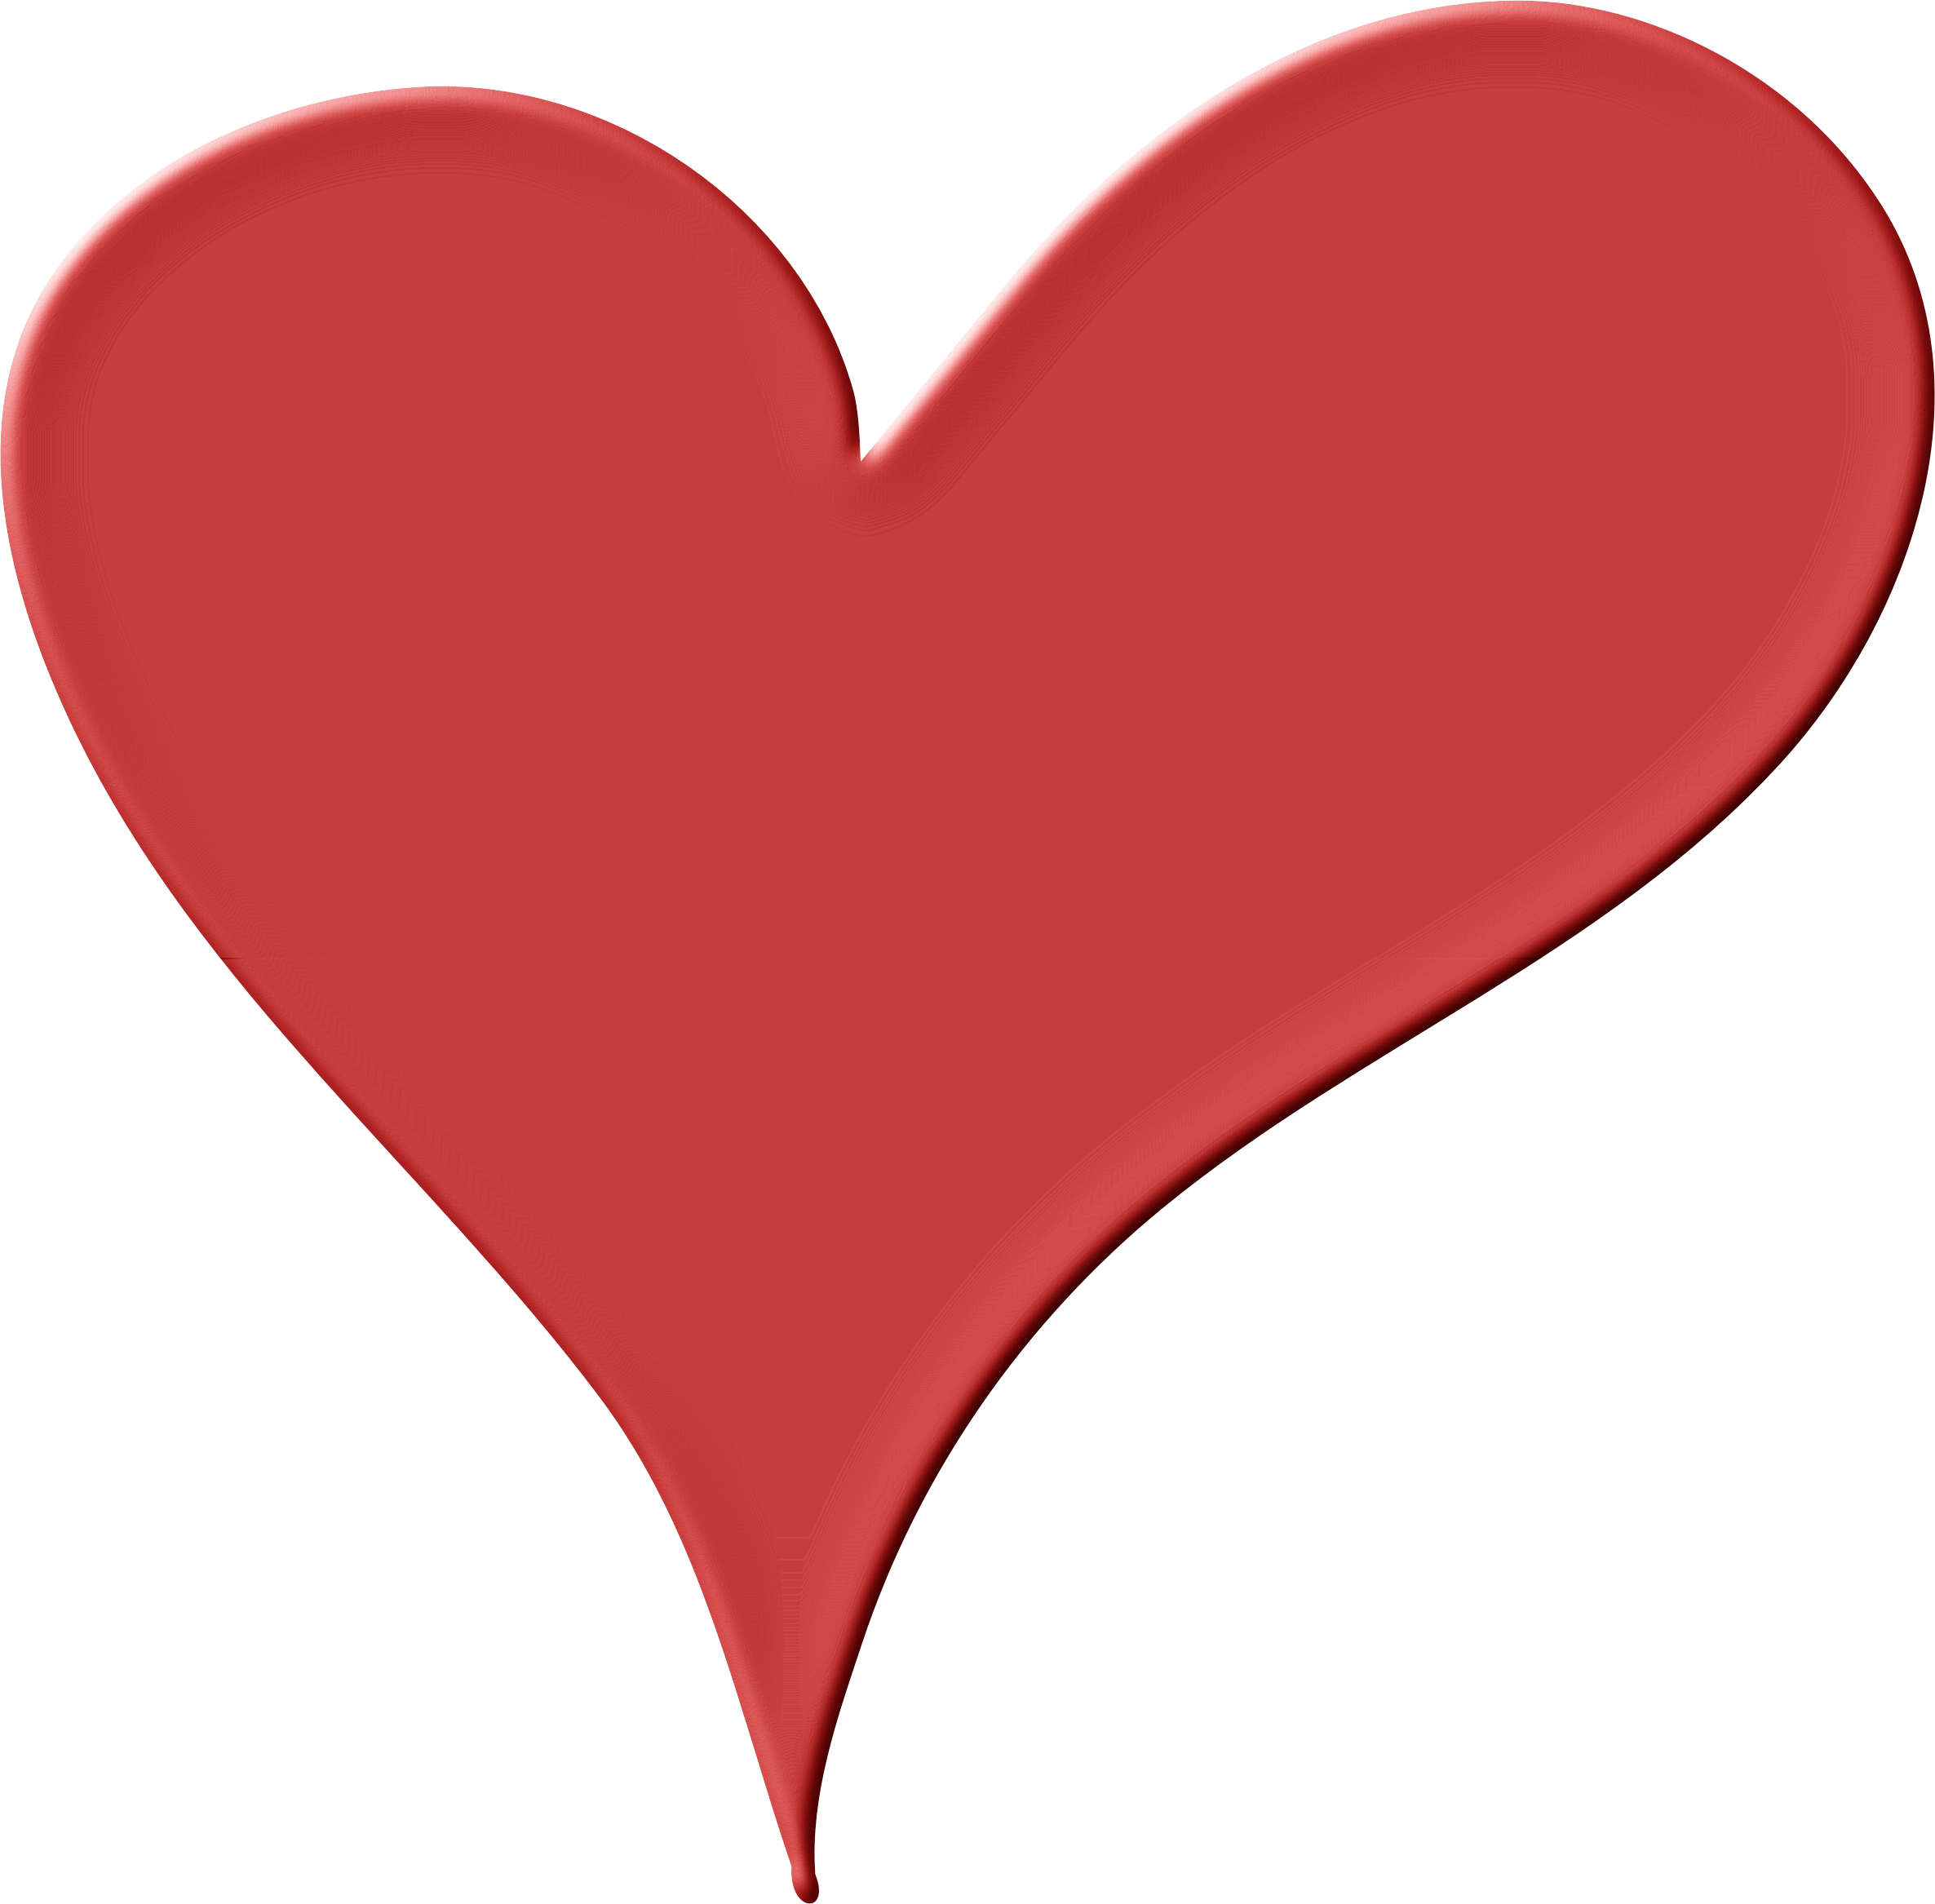 Heart In Red - Heartin (2372x2334)